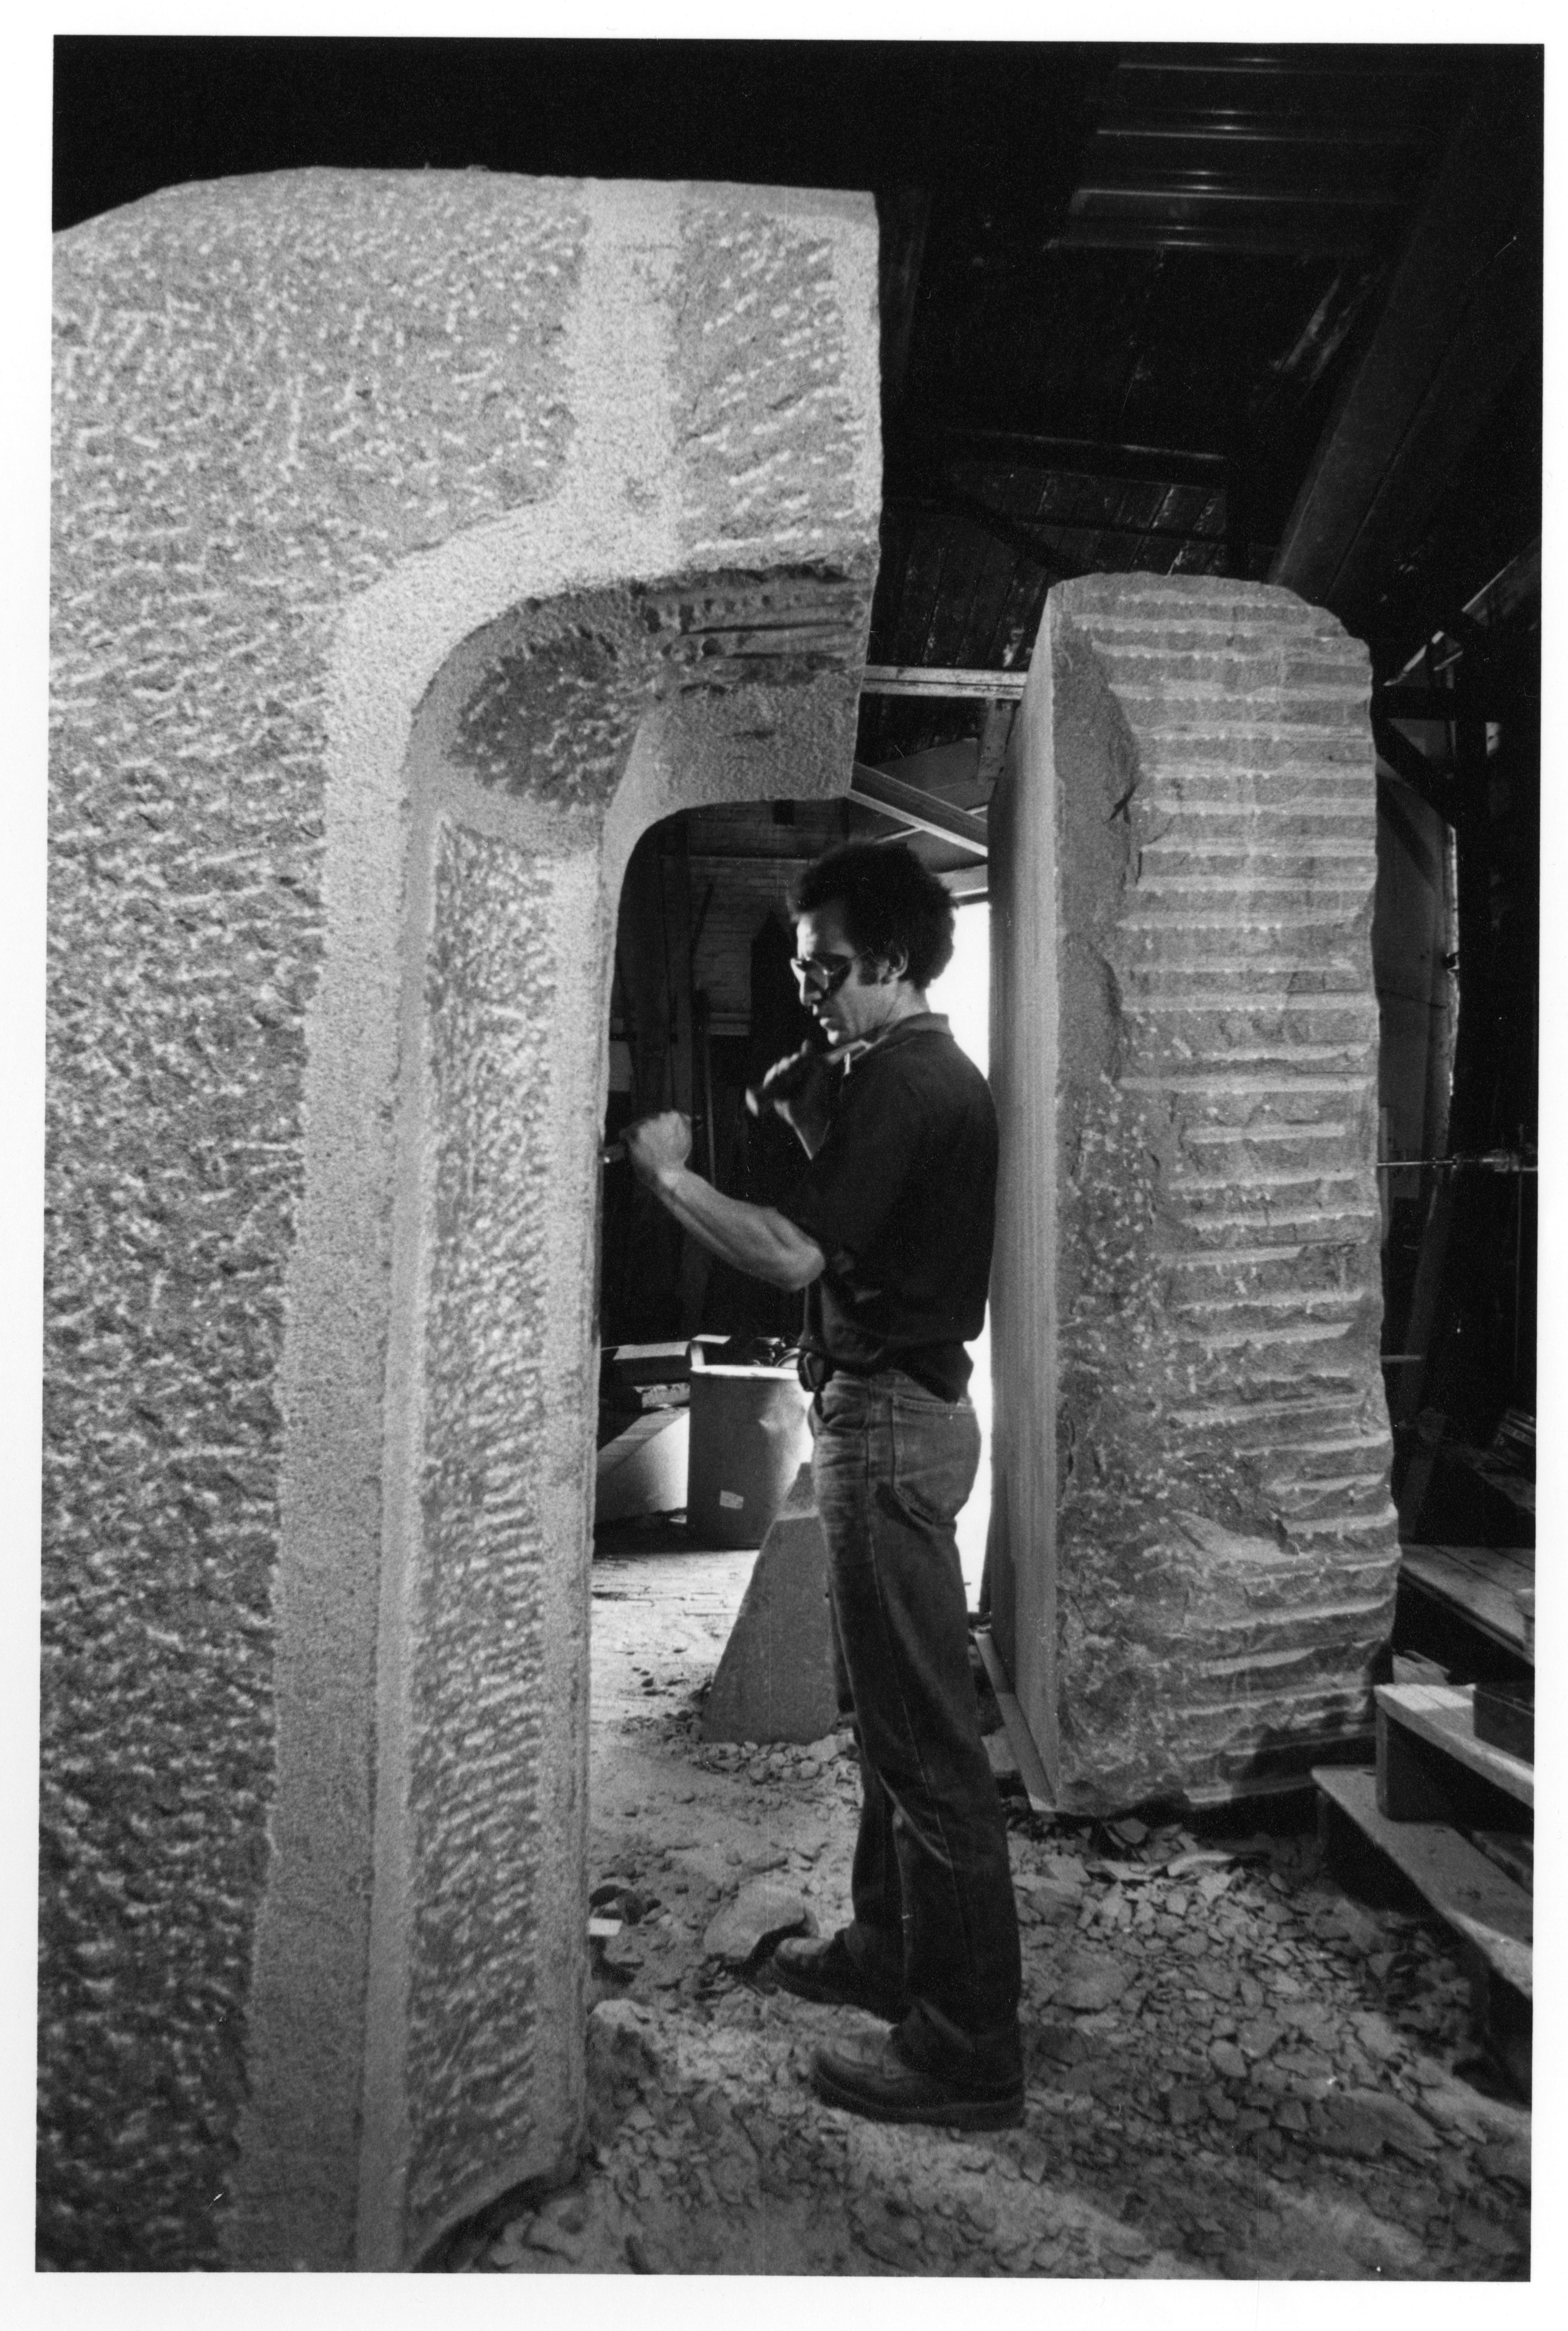 Artist Carlos Dorrien works on the "Portal" sculpture by carving large pieces of Laurentian granite.